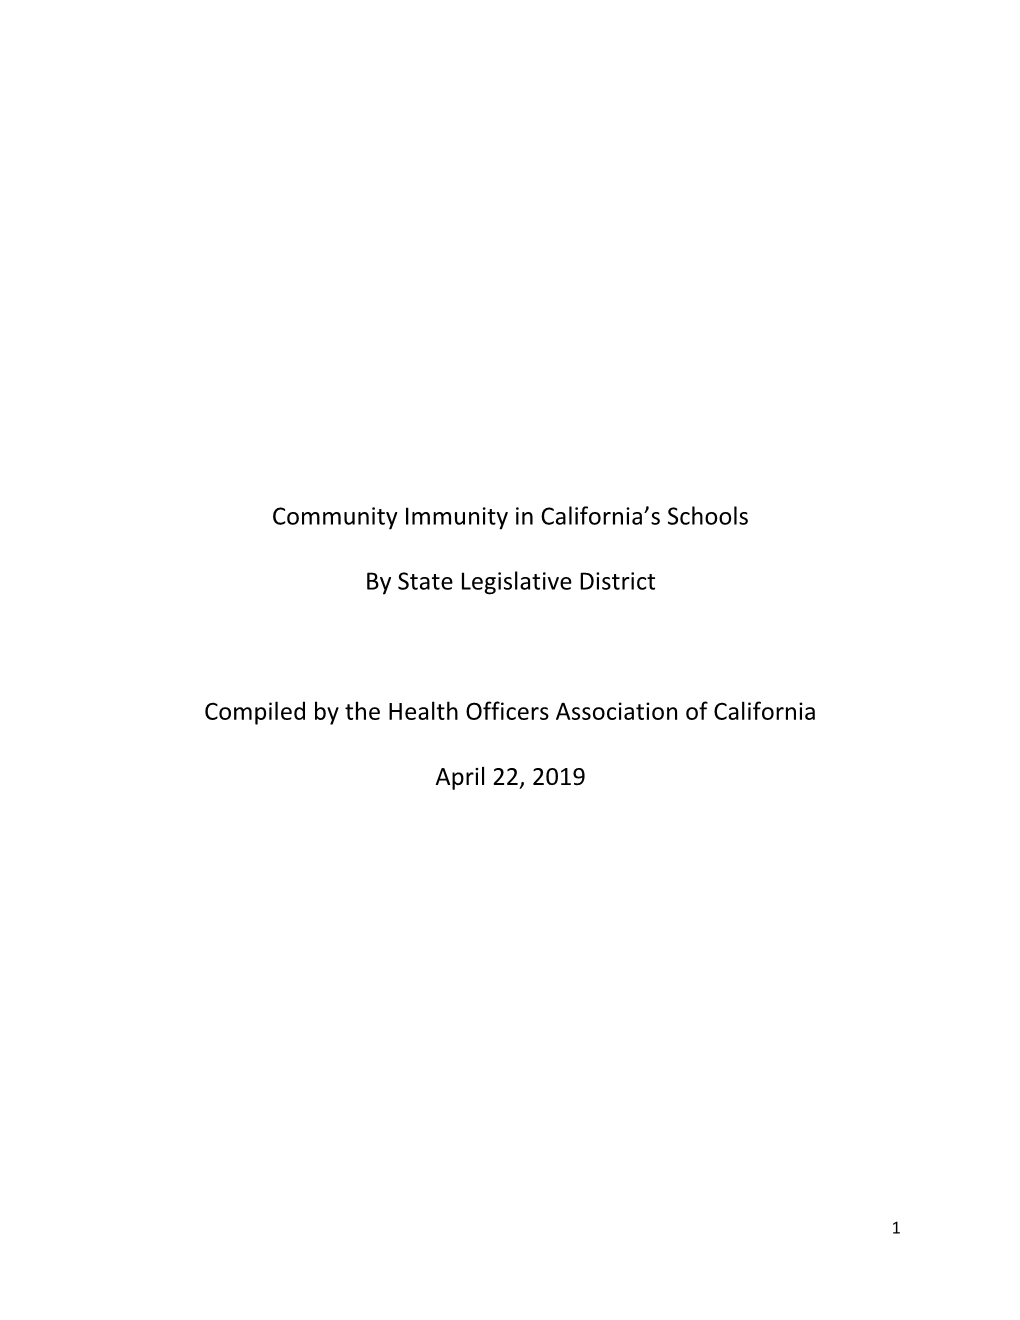 Community Immunity in California's Schools by State Legislative District